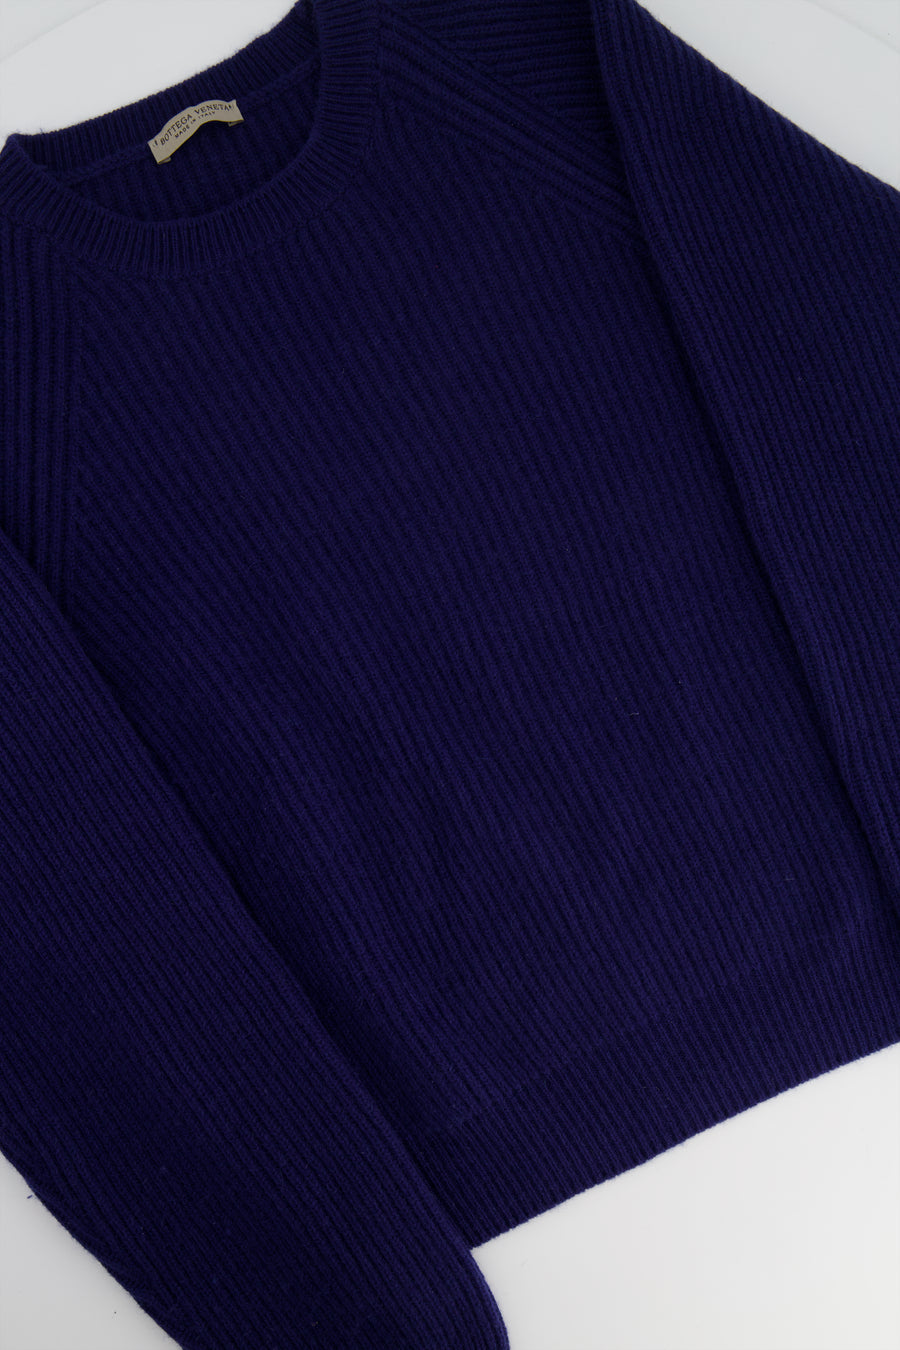 Bottega Veneta Blue Knitted Cashmere Jumper Size IT 42 (UK 10)